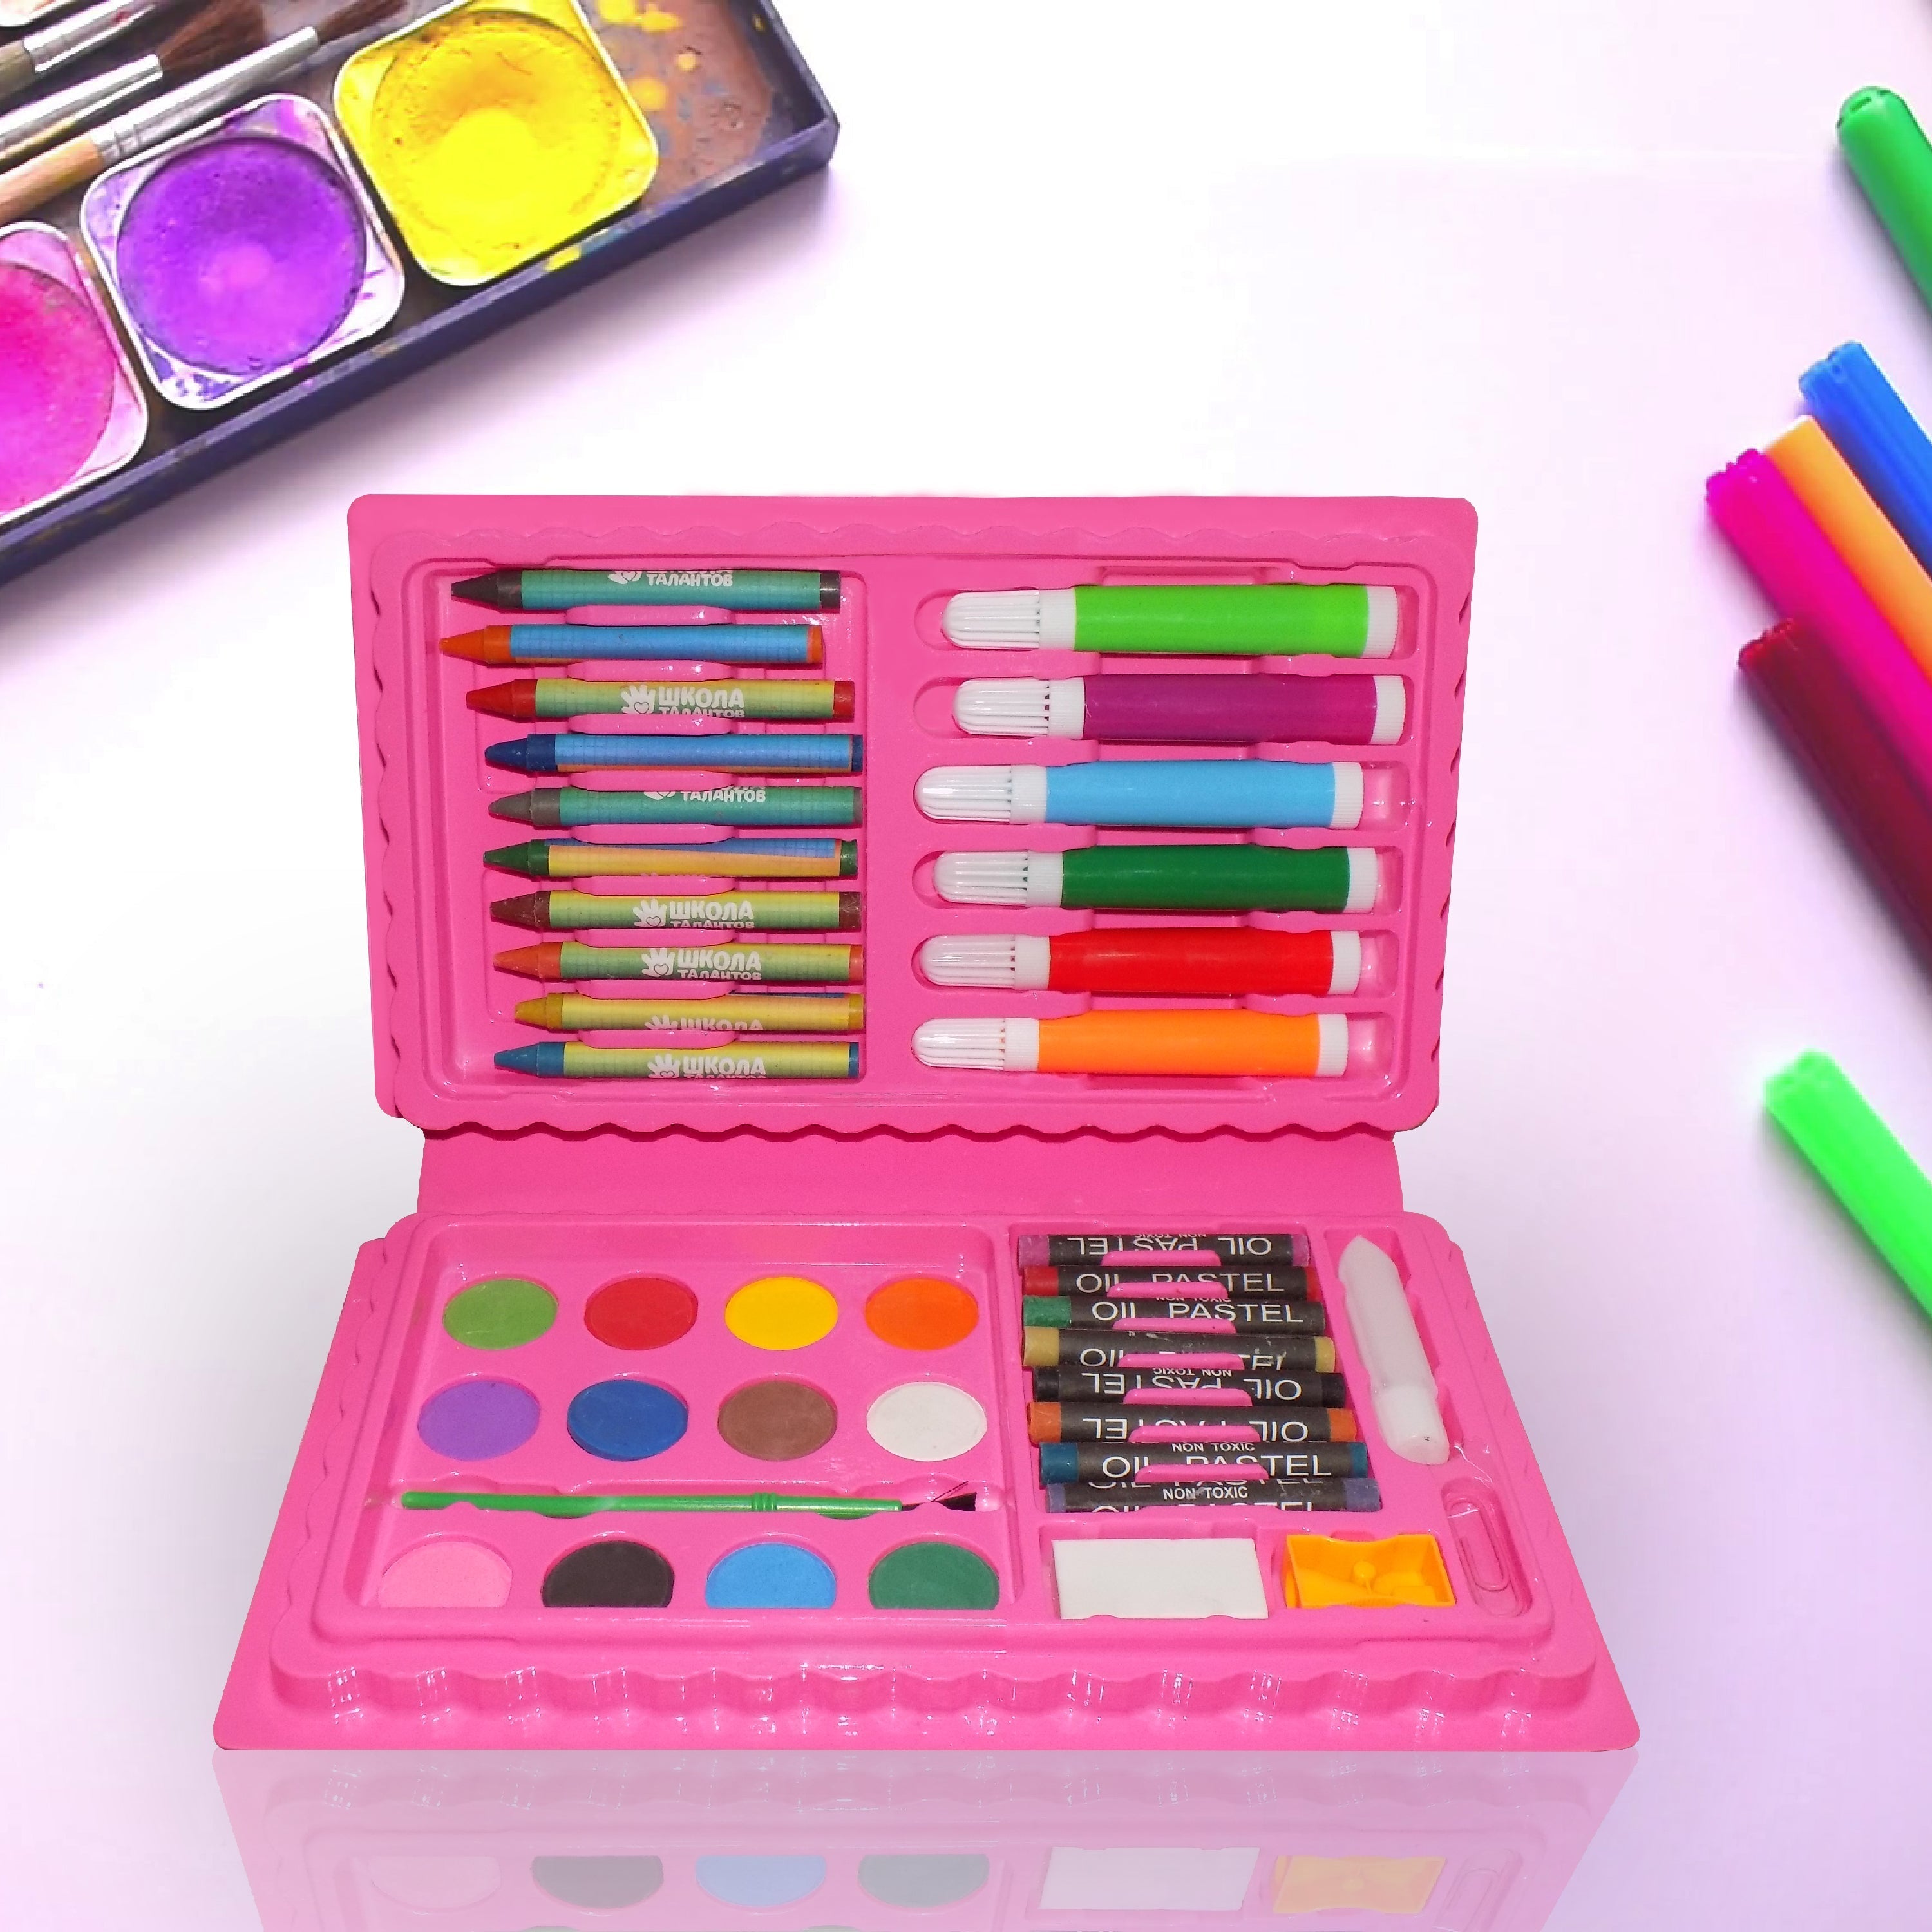 1092A Coloring Combo Colors Box Color Pencil, Crayons, Water Color, Sketch Pens Set of 42 